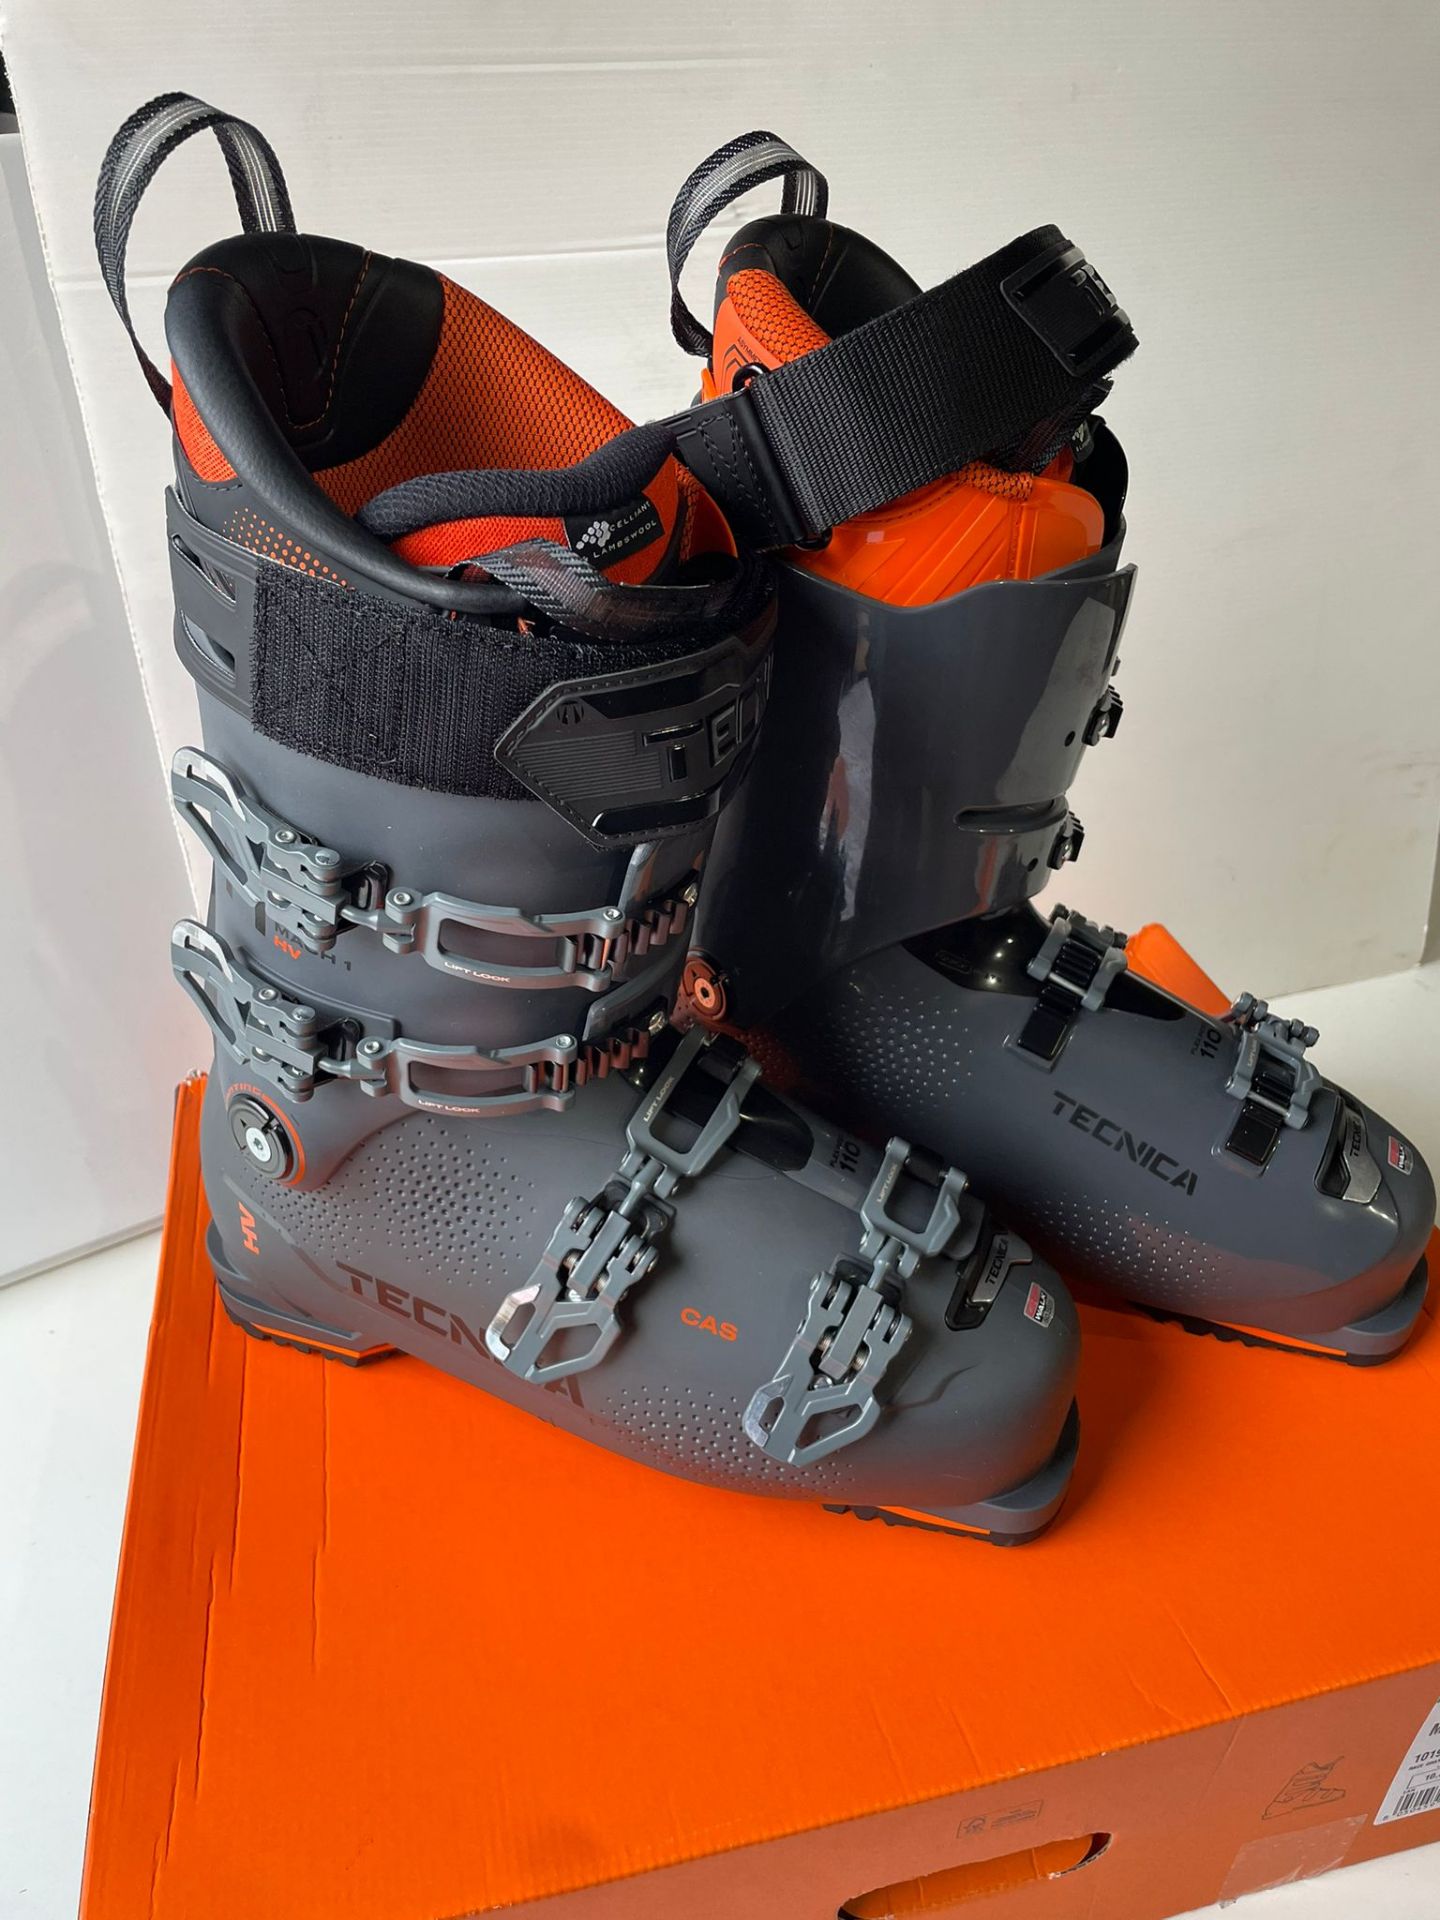 Tecnica ski boot, UK size 10.5